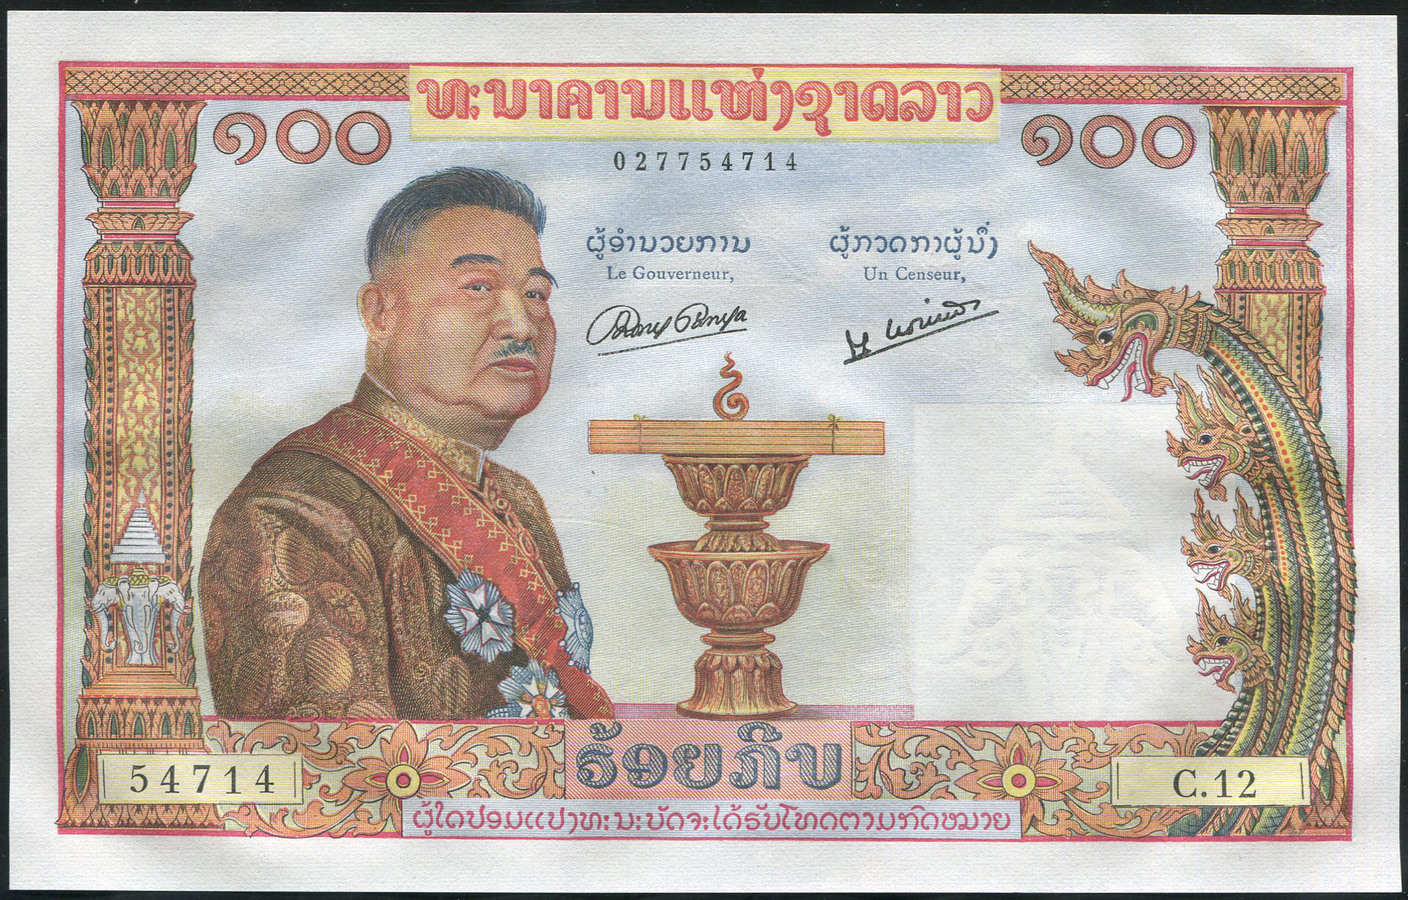 100 кип (Лаос)